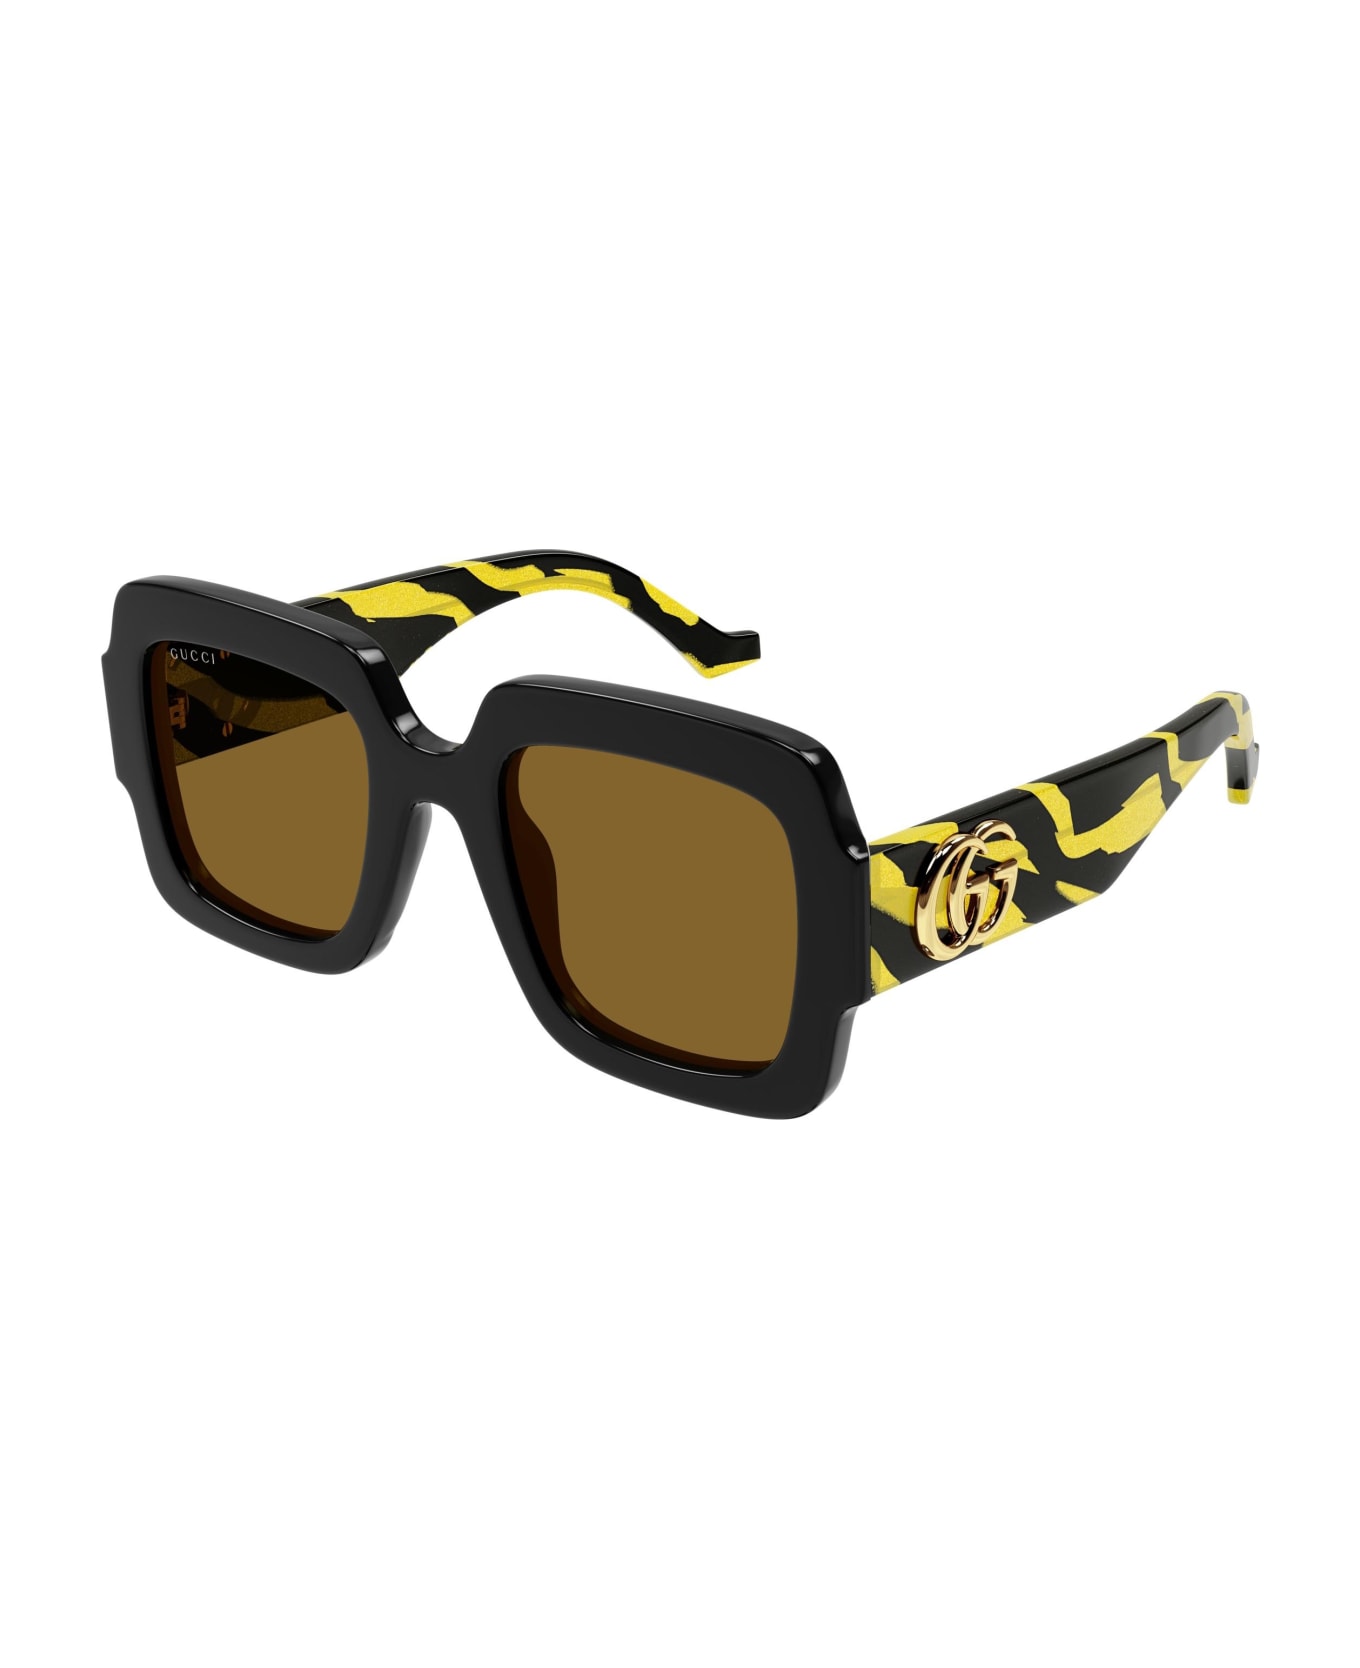 Gucci Eyewear Sunglasses - Nero/Marrone